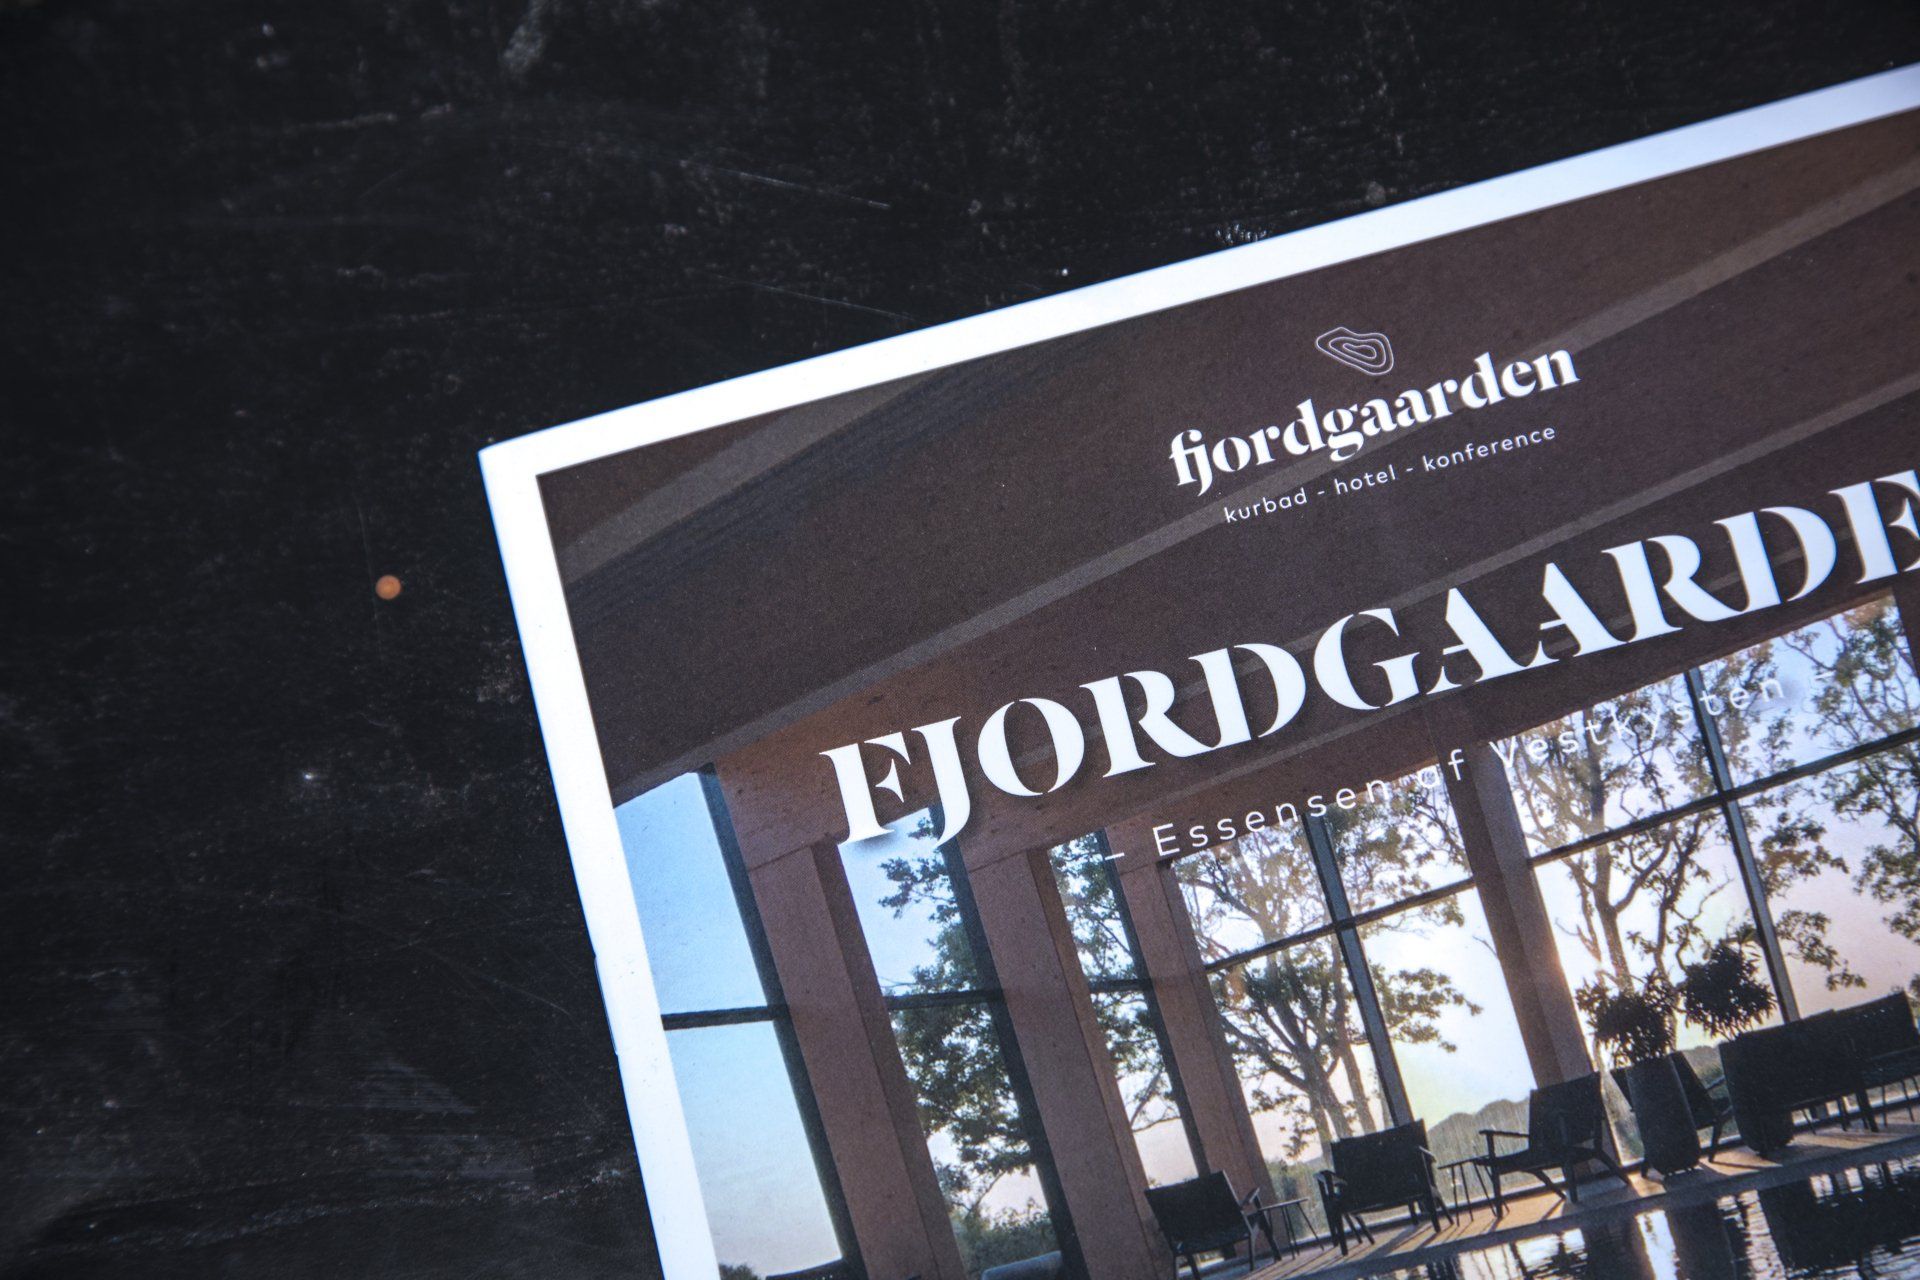 Fjordgaarden Hotelmagasin